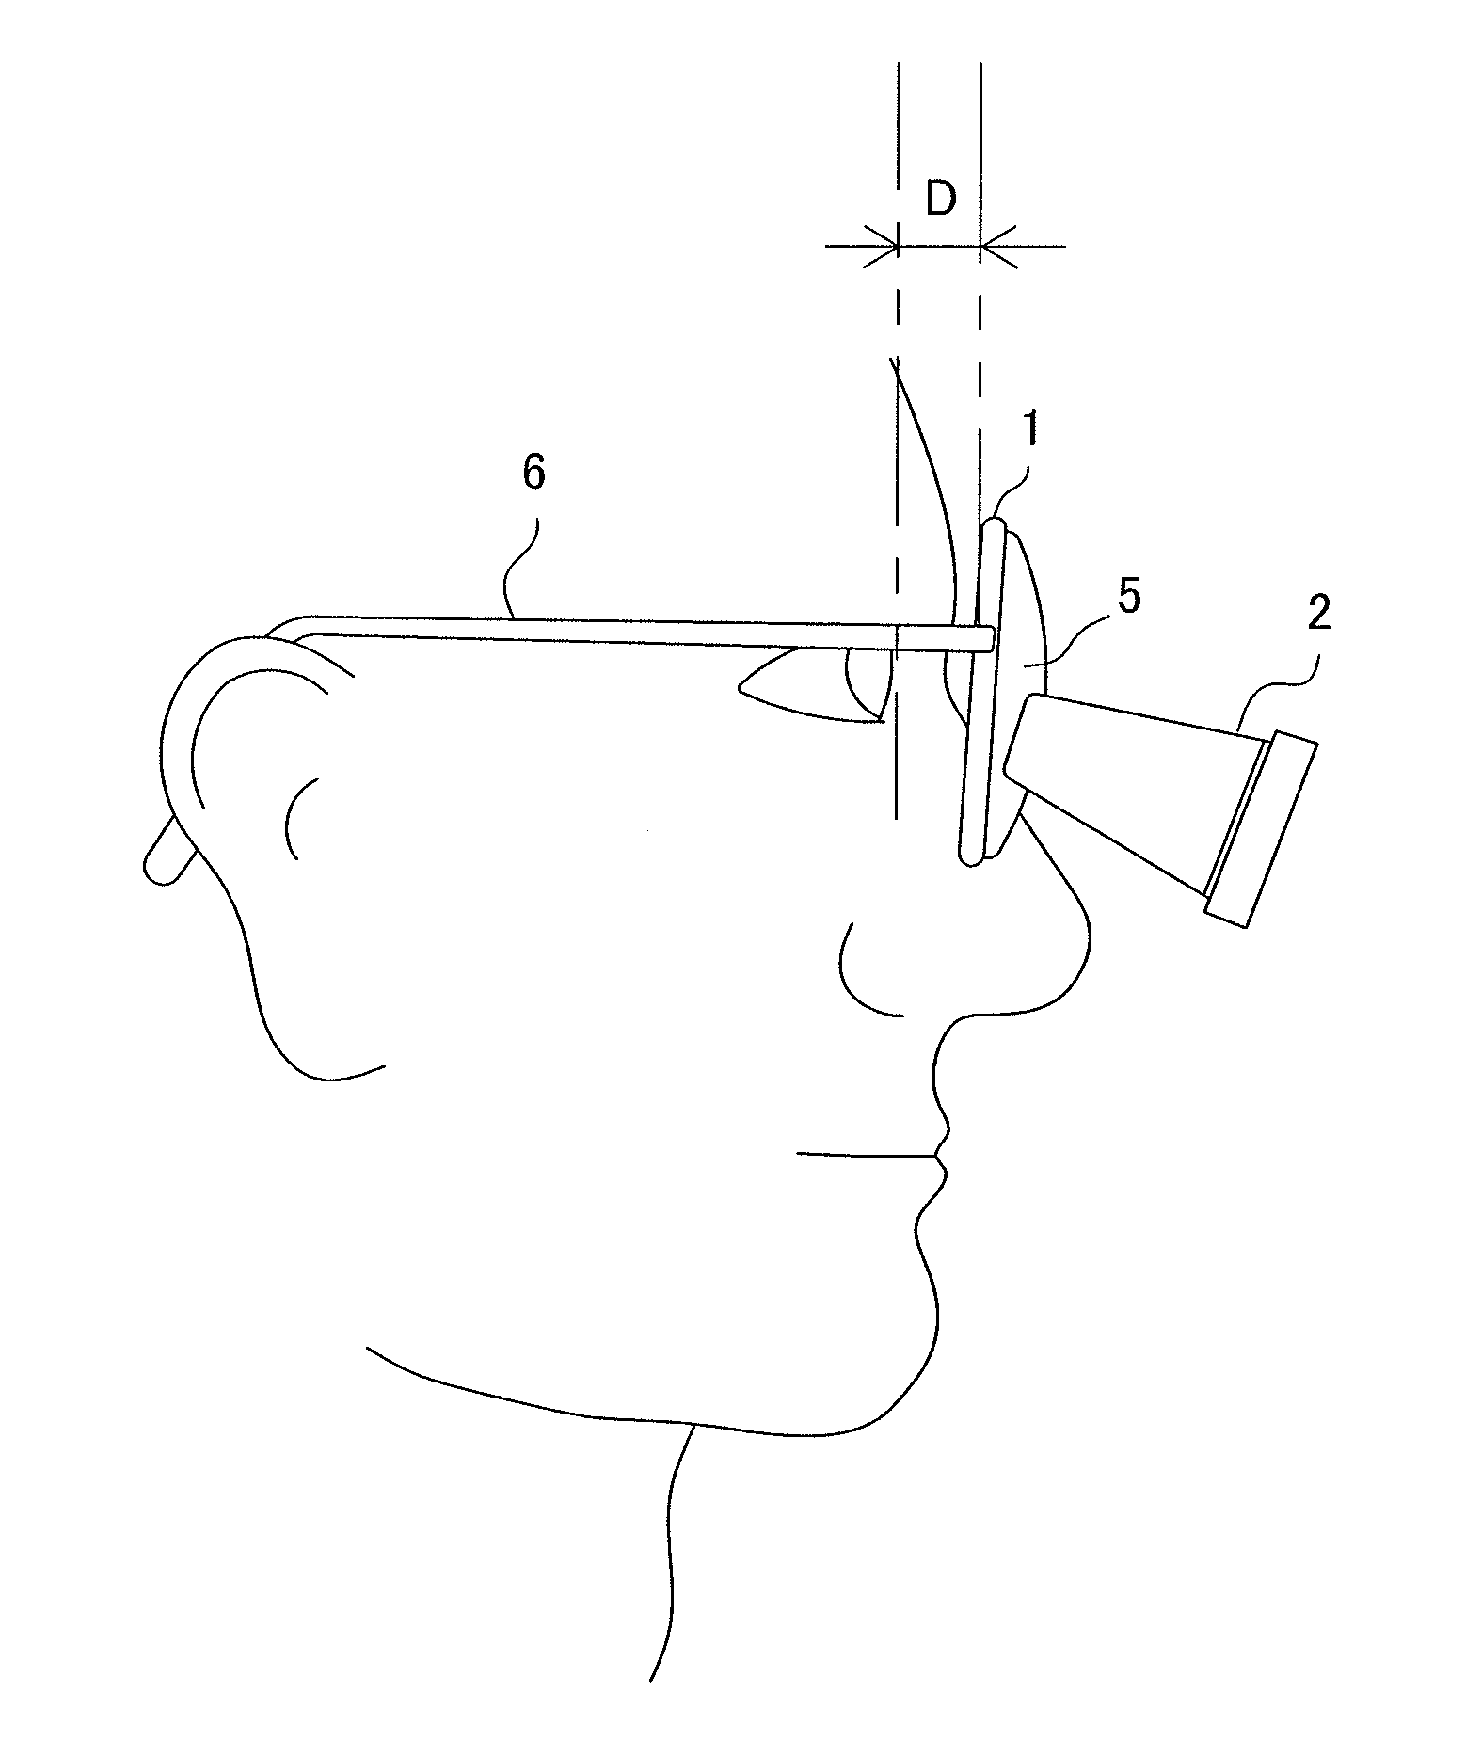 Method for manufacturing binocular loupe